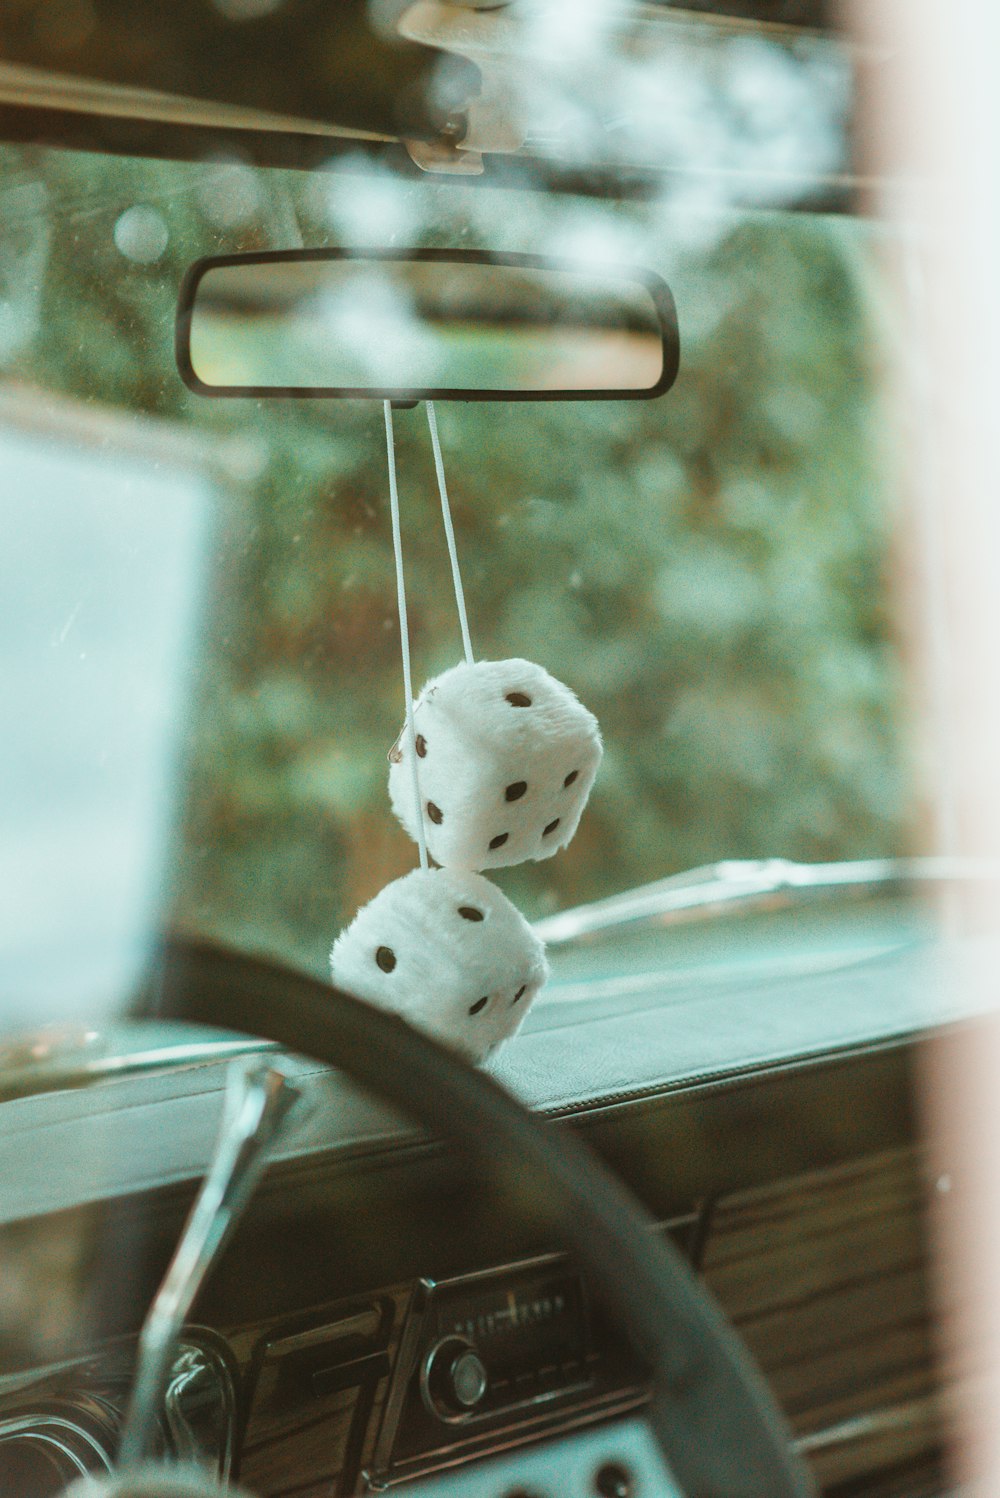 white and black plush toy on car rear mirror